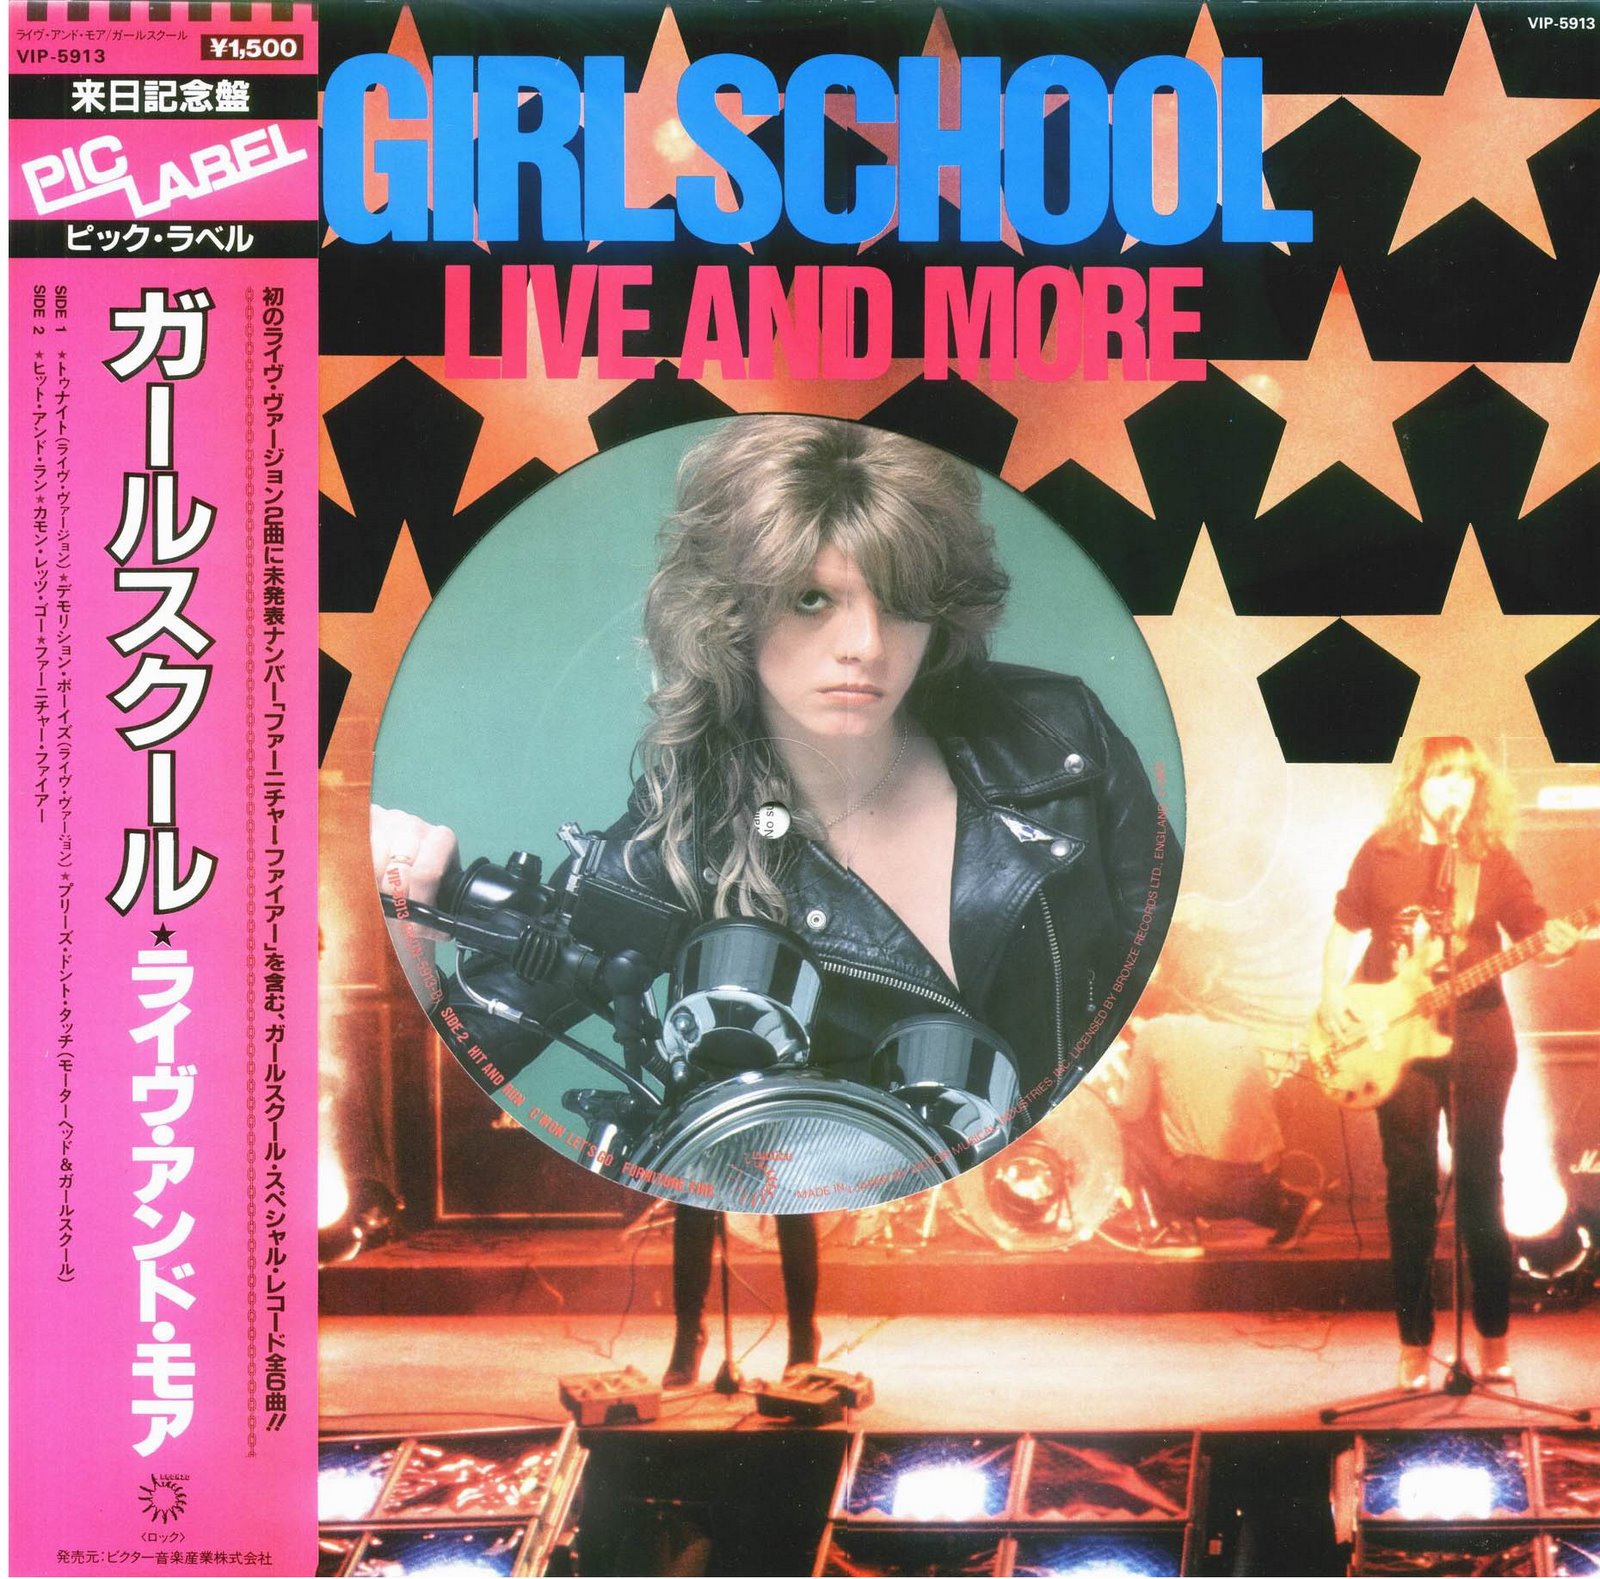 [Girlschool-Live+and+more-vinyl-jap+release-1982-front.jpg]